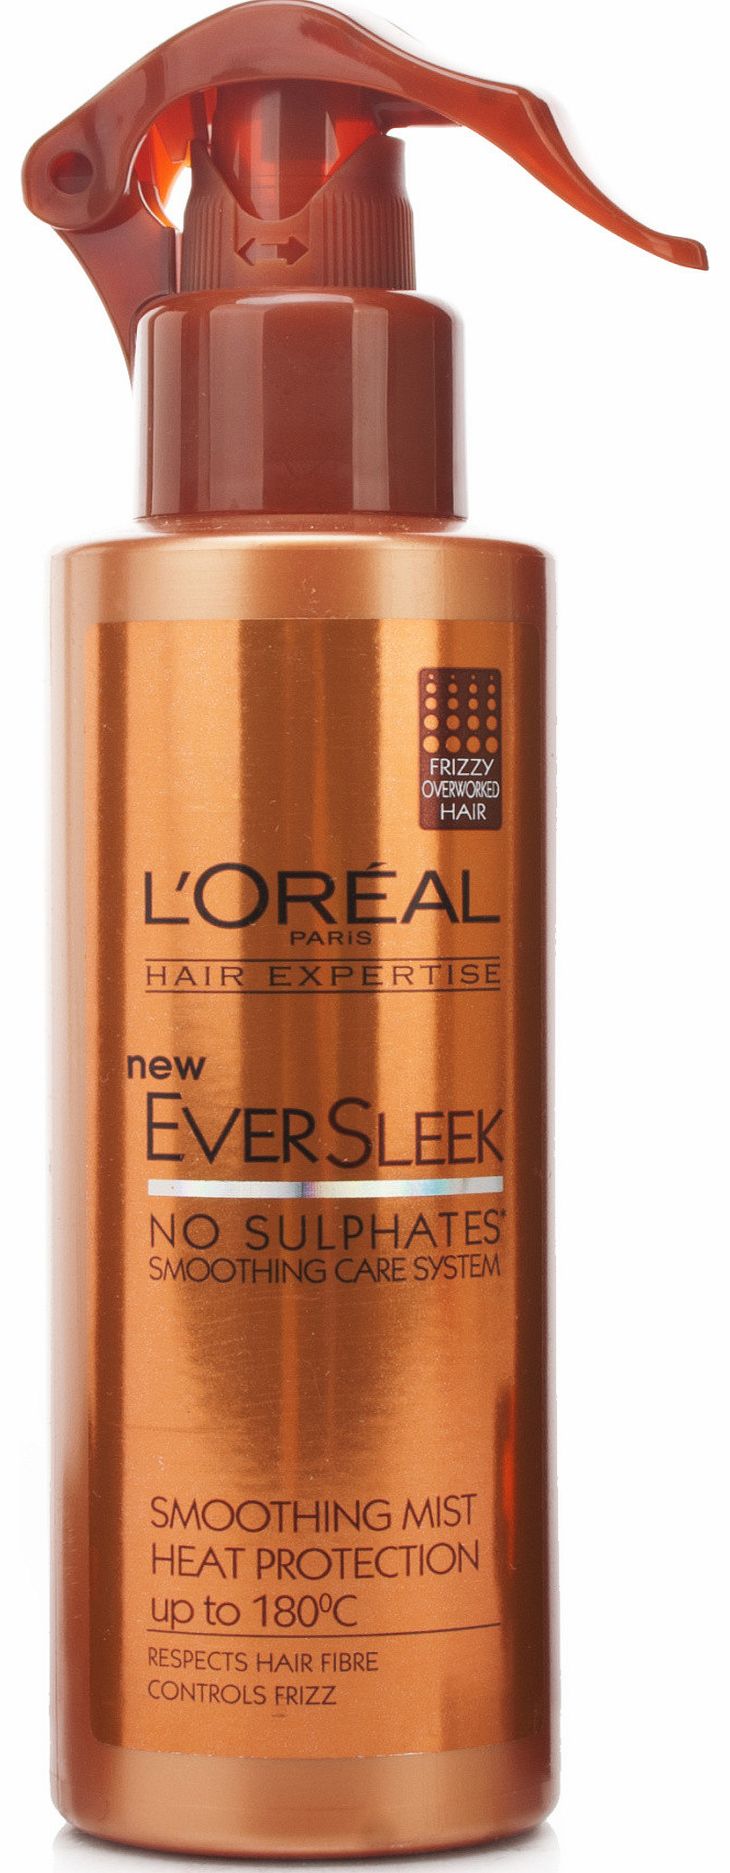 L'Oreal Hair Expertise EverSleek Heat